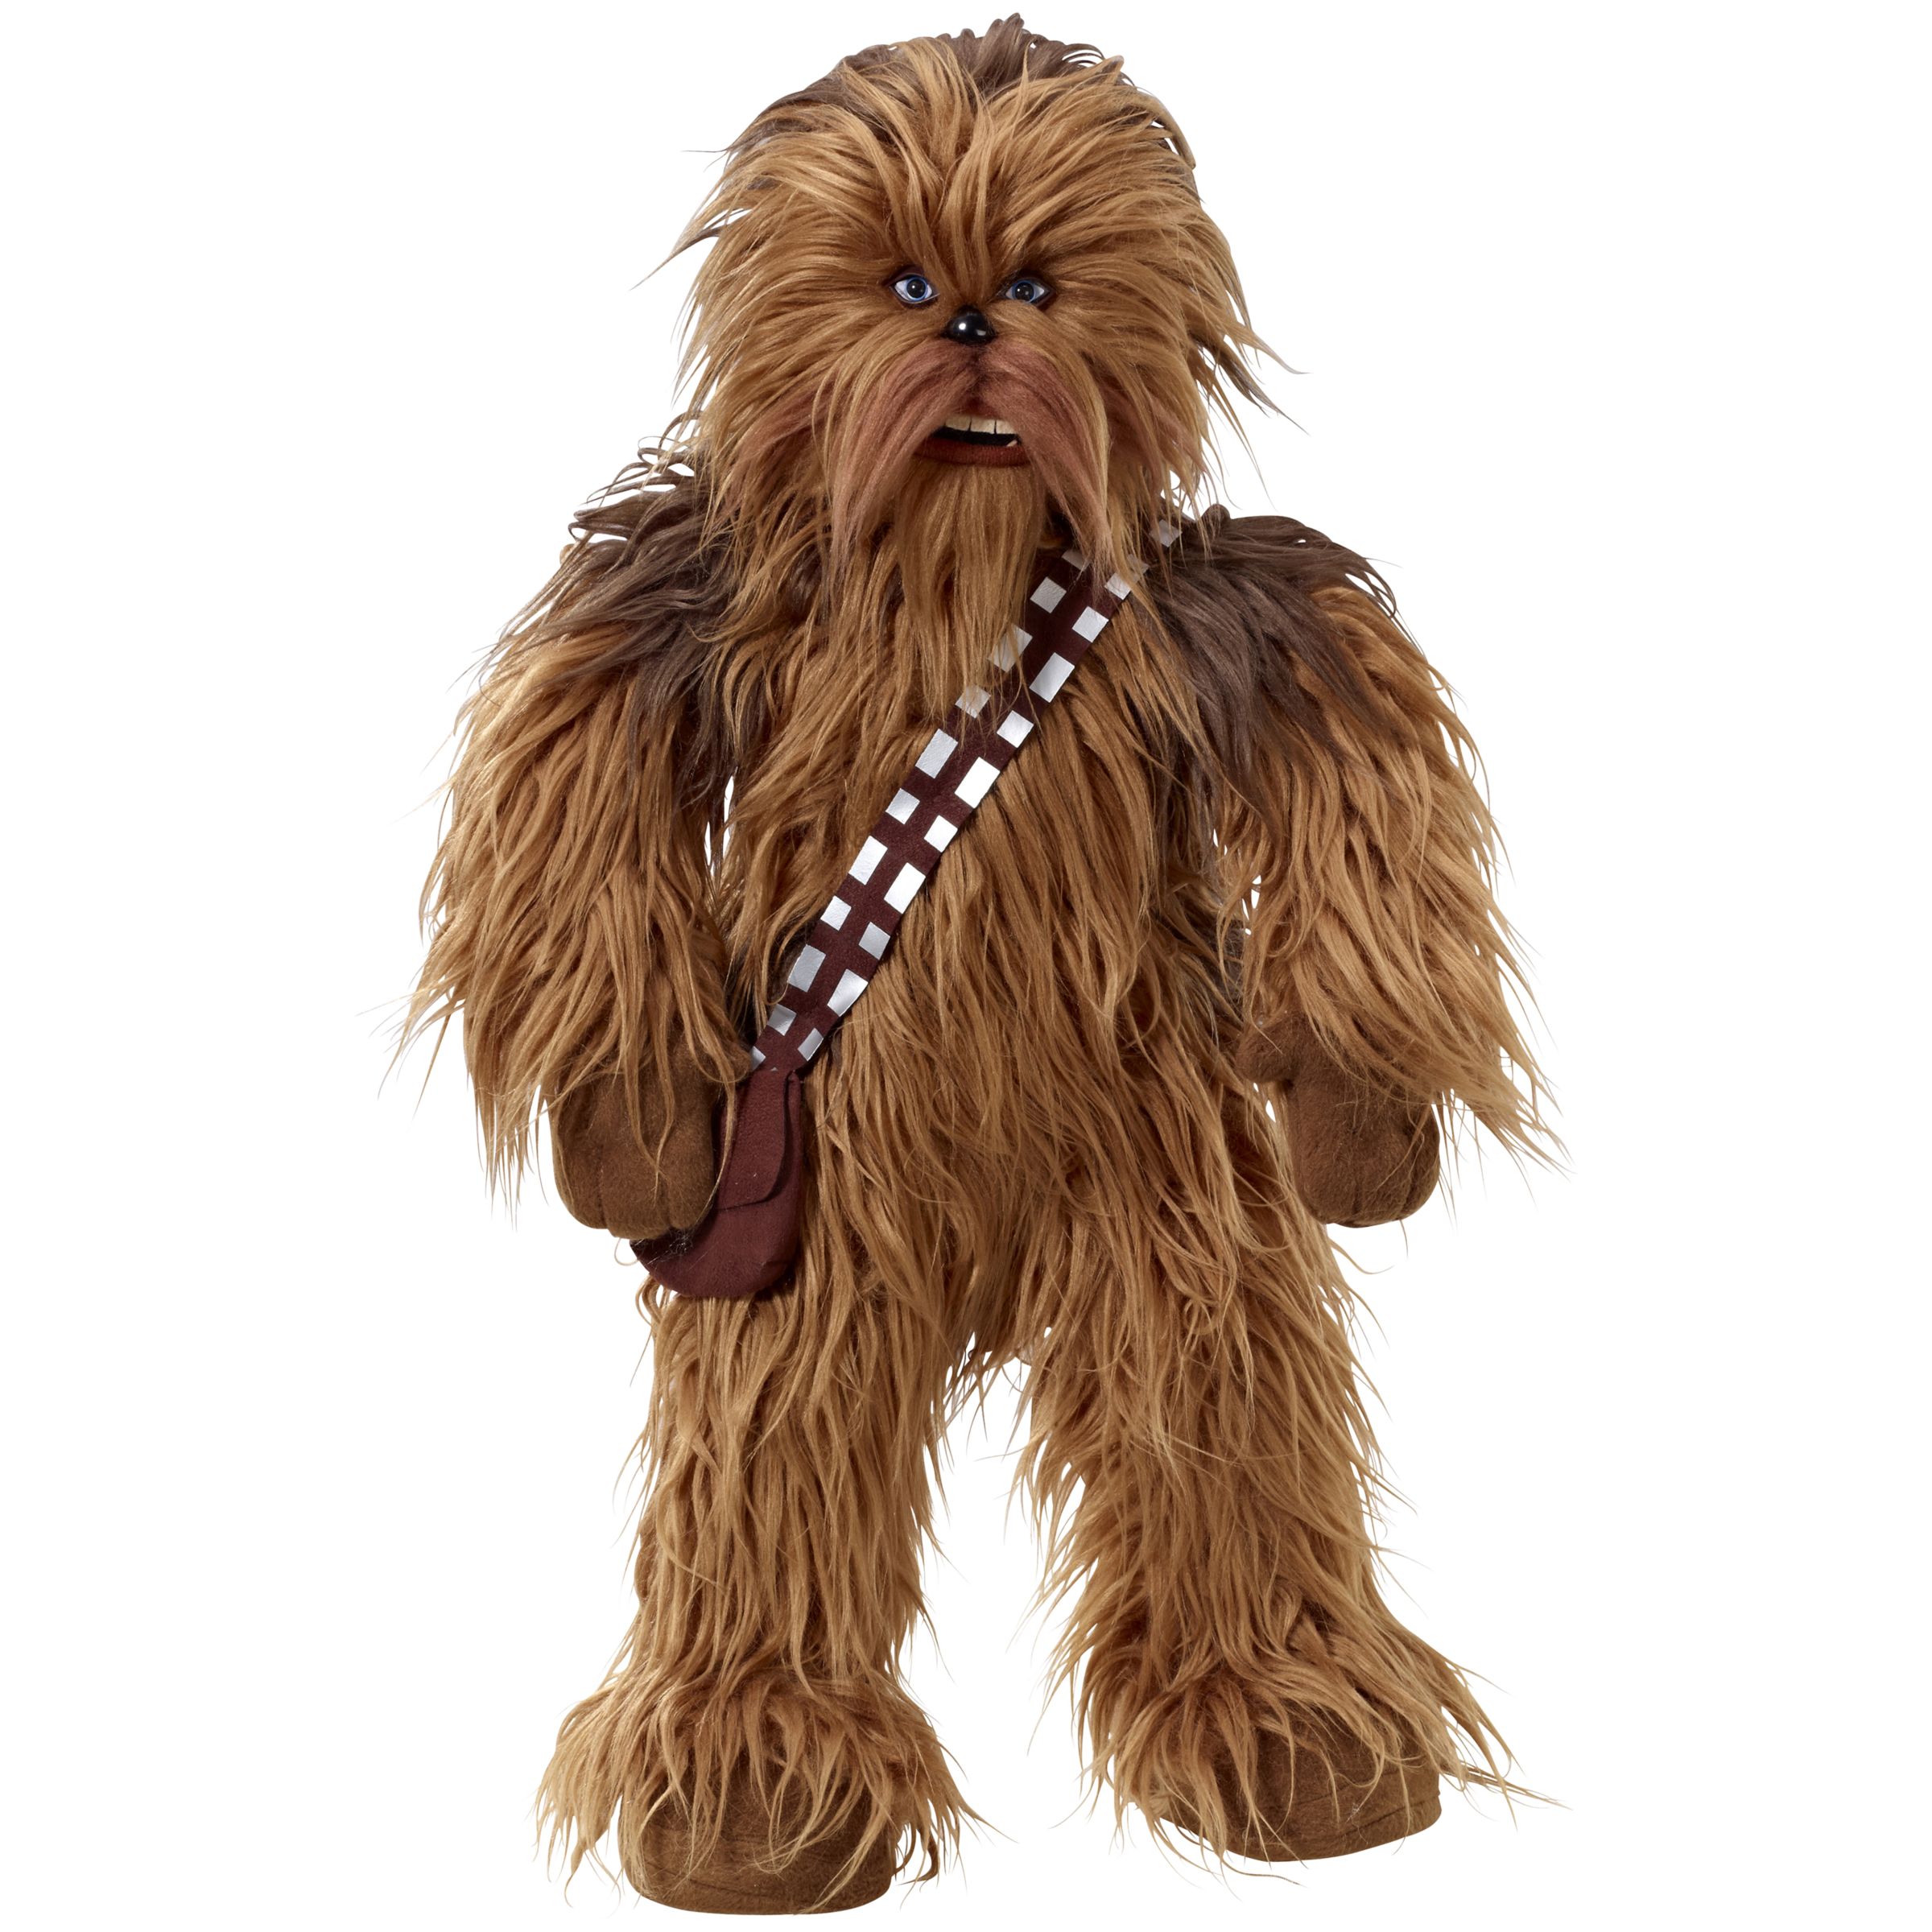 Star Wars 15 inch Deluxe Chewbacca Talking Plush 